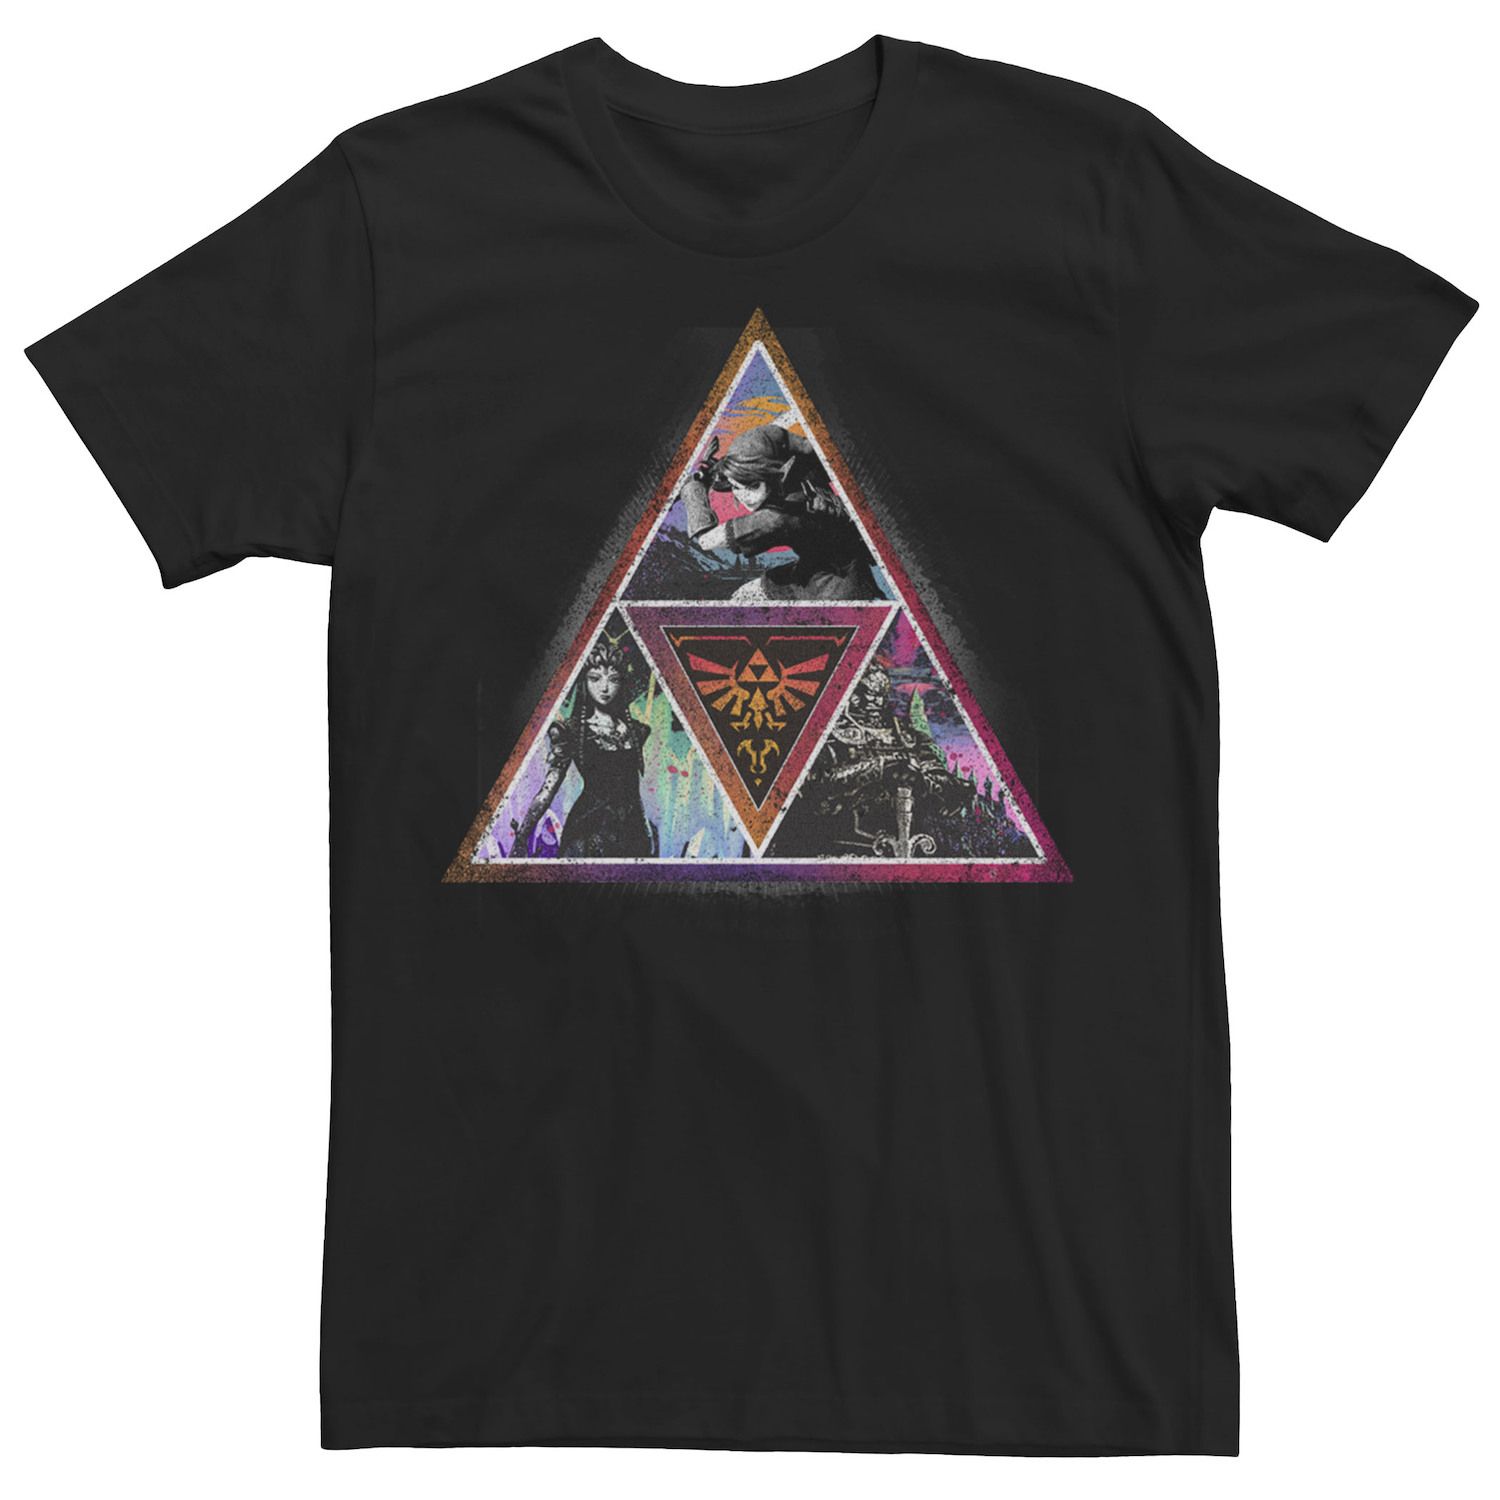 Мужская летняя цветная футболка Legend of Zelda Triforce Triforce Licensed Character летняя цветная футболка с рисунком nintendo legend of zelda triforce triforce для мальчиков 8–20 лет licensed character черный